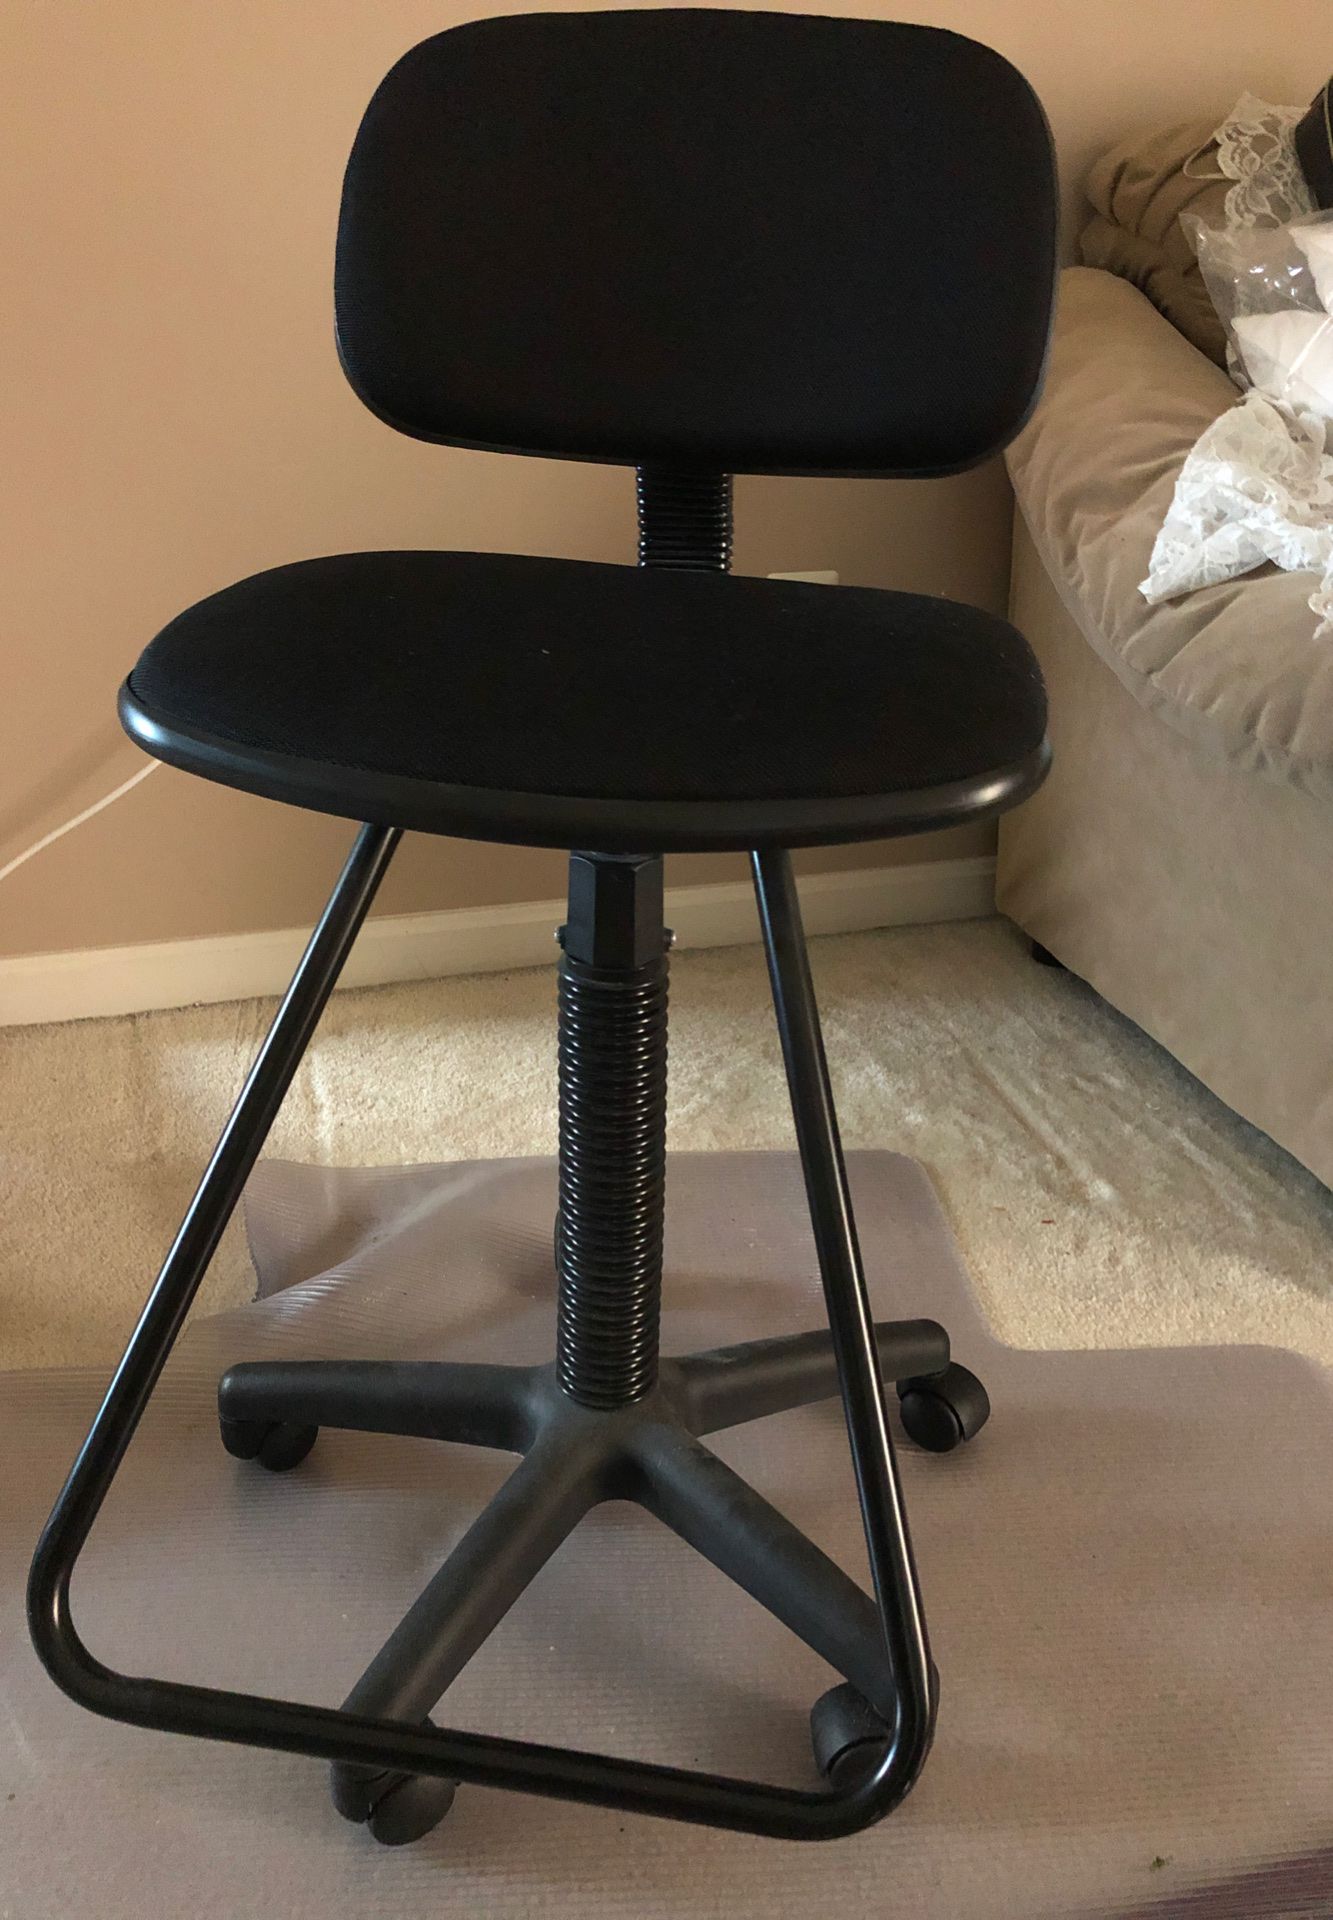 Adjustable computer chair